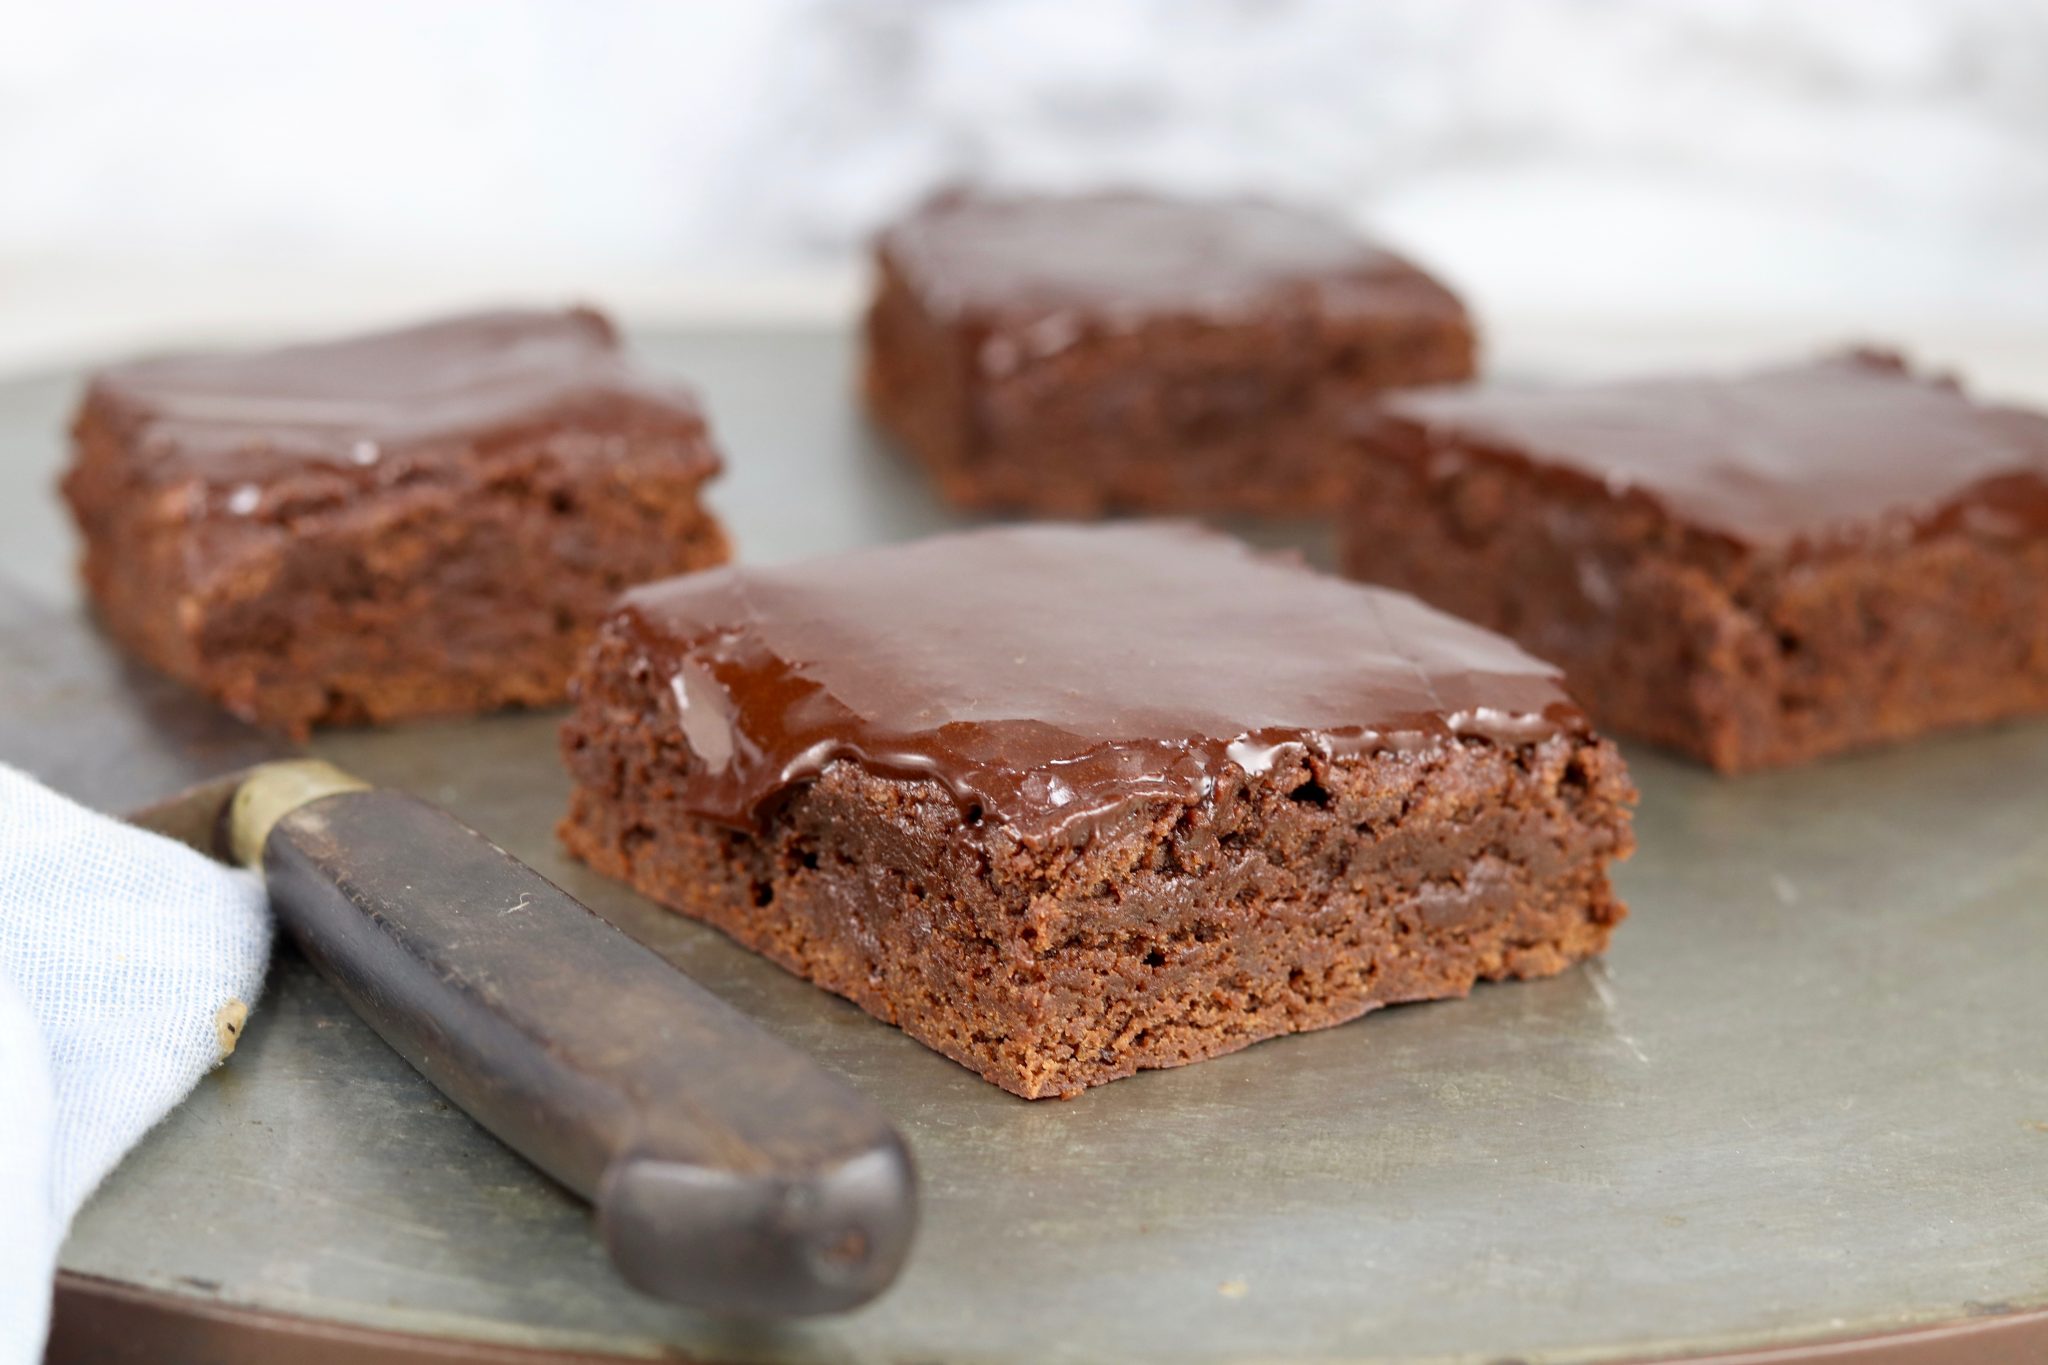 Chocolate-Glazed Brownies Recipe: How to Make It